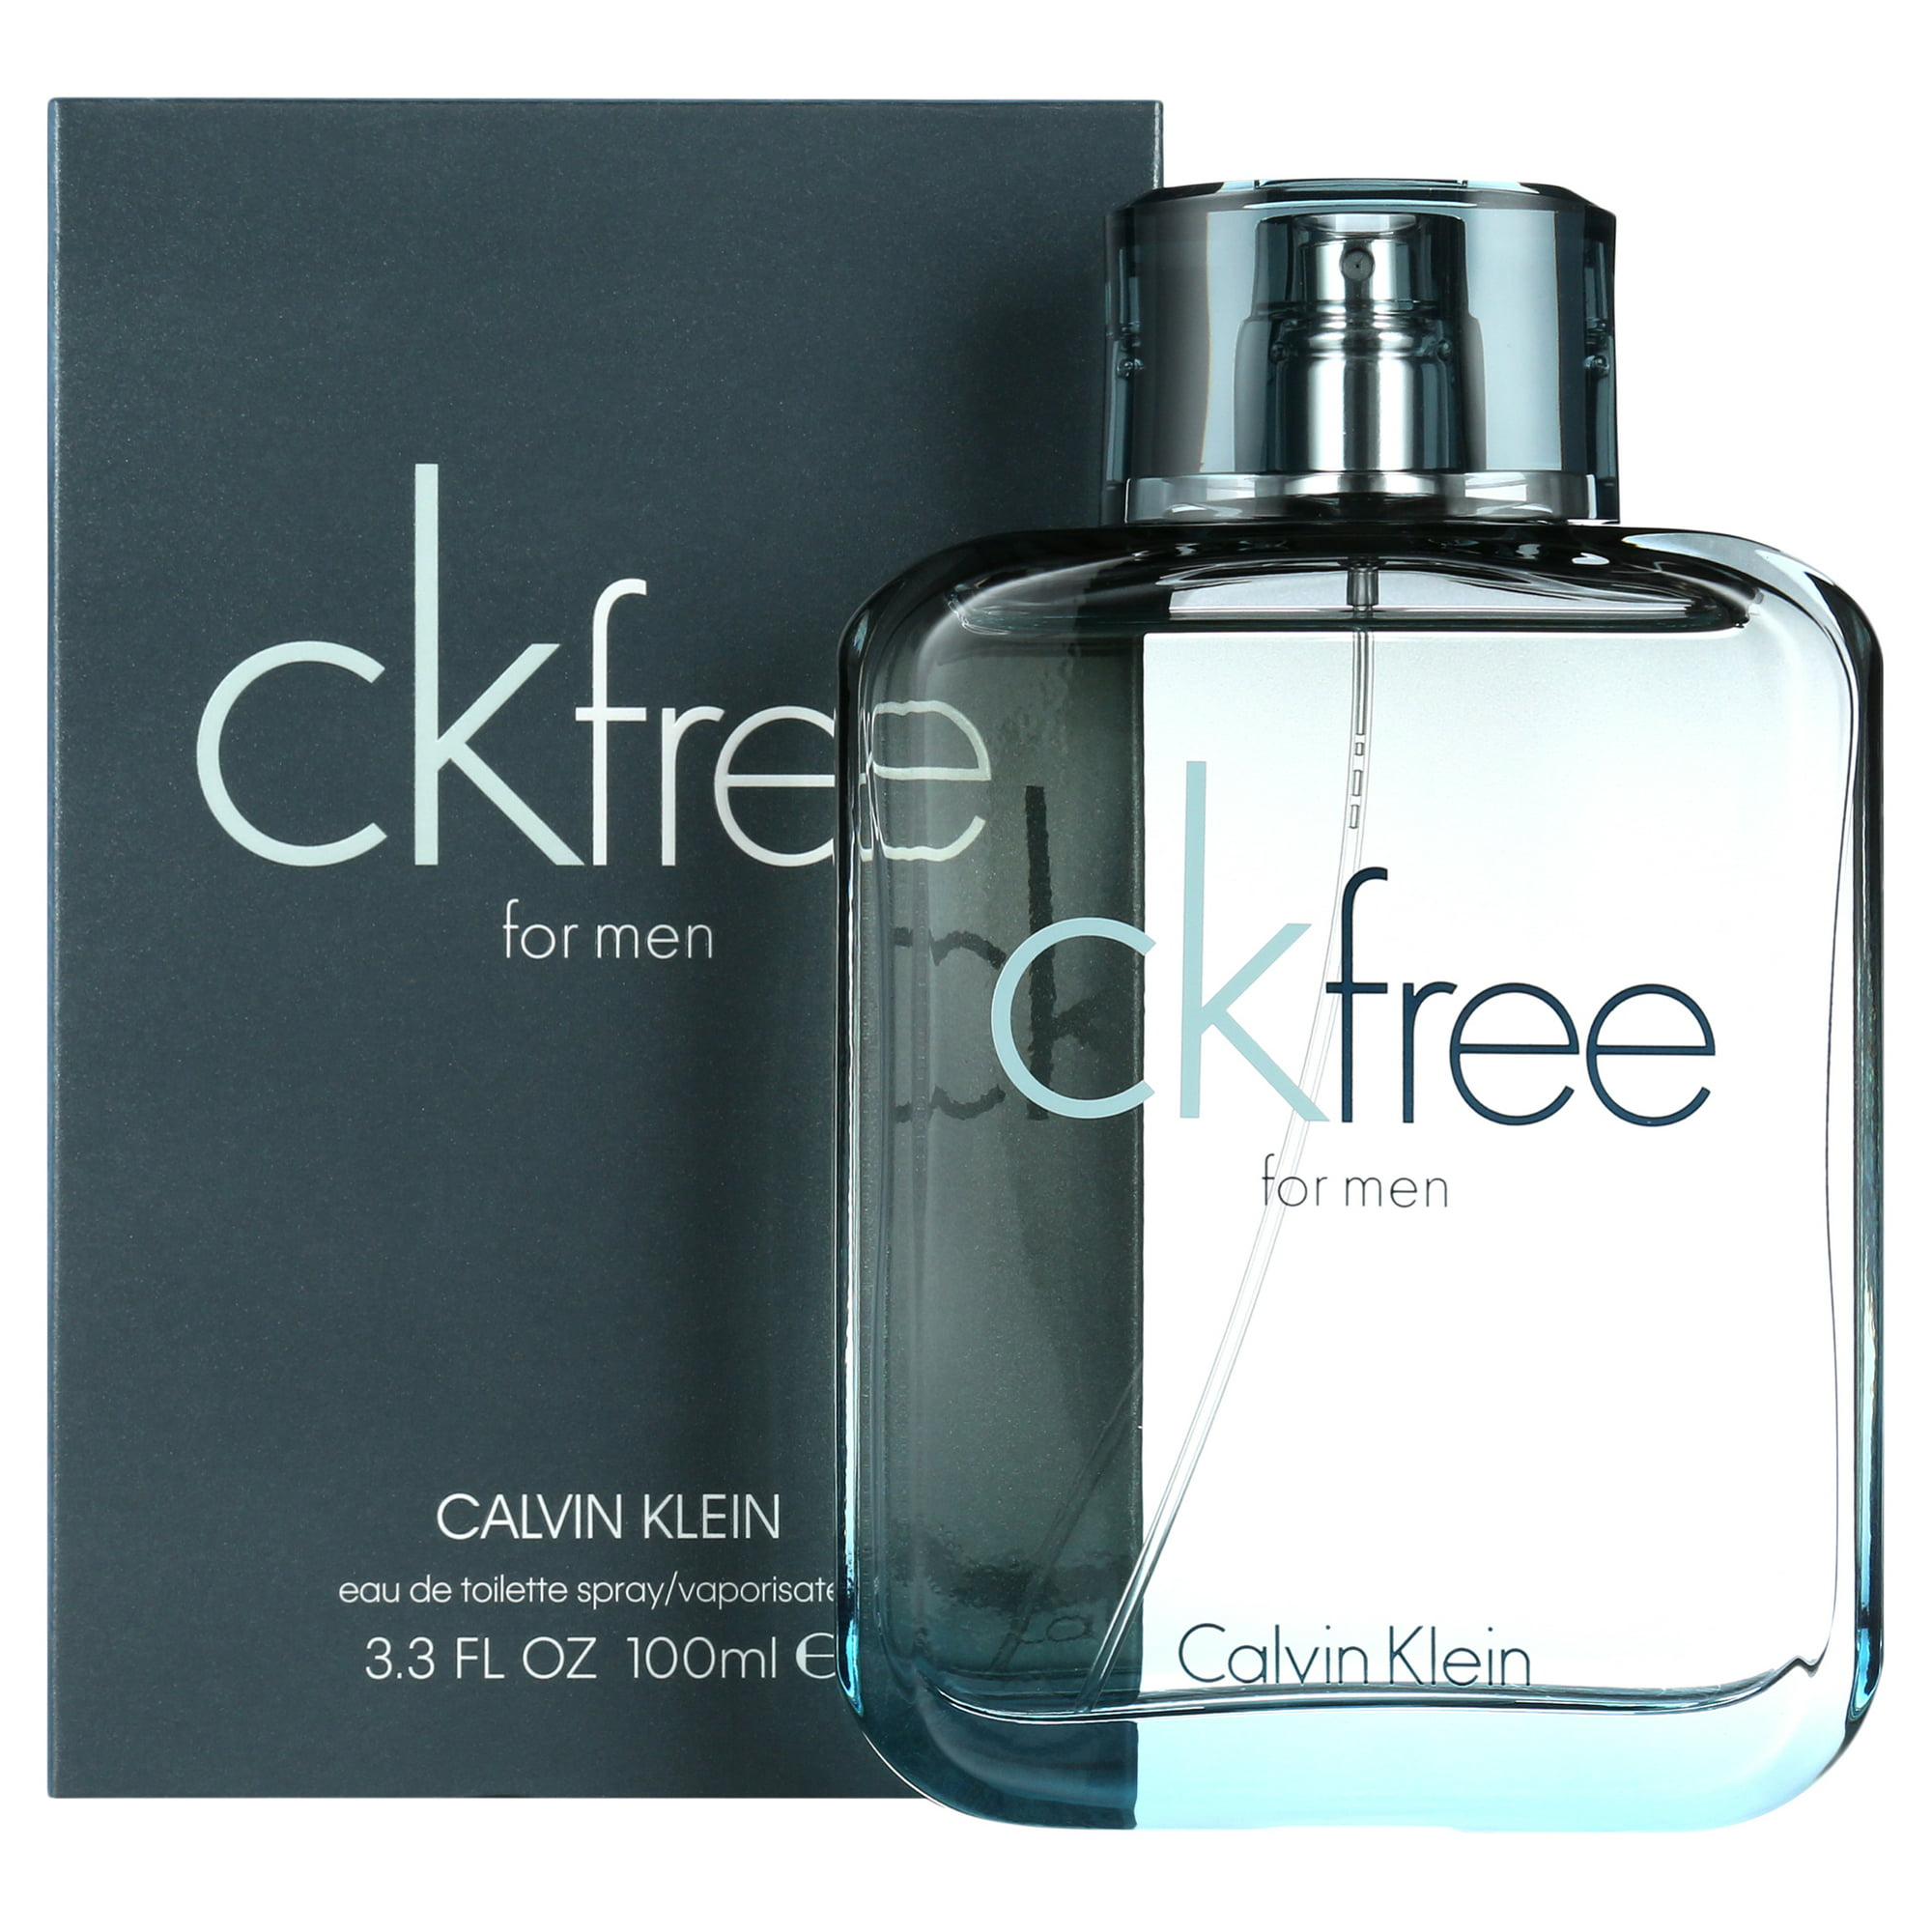 flexibel ego verhaal Calvin Klein CK Free Eau De Toilette Spray, Cologne for Men, 3.4 Oz -  Walmart.com